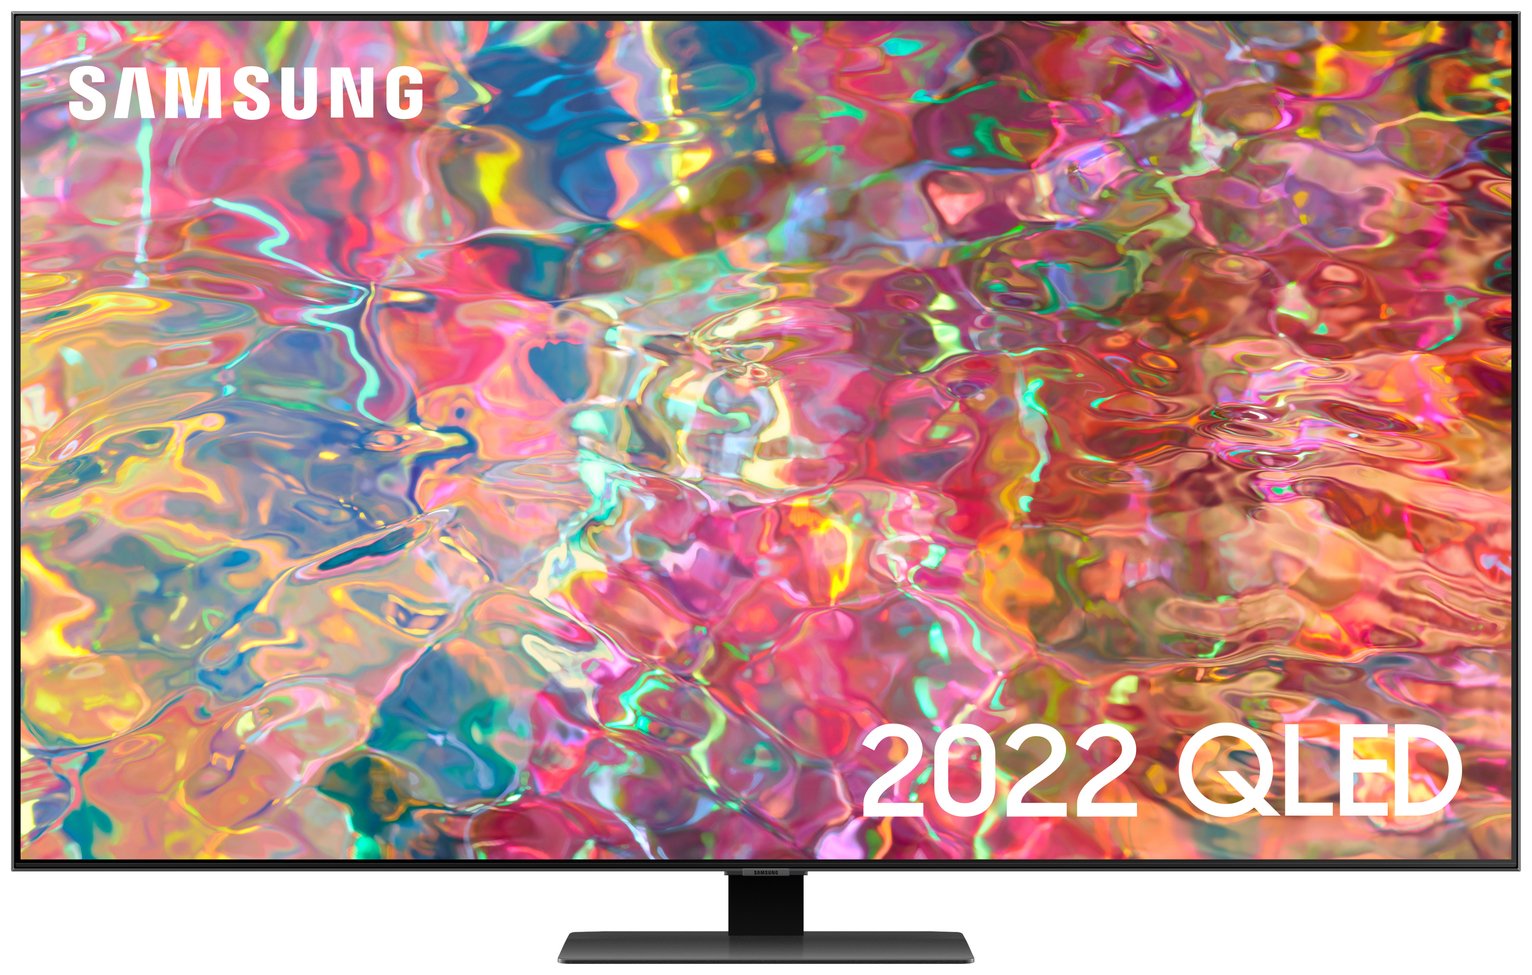 Samsung 85 Inch QE85Q80BATXXU Smart 4K UHD HDR QLED TV